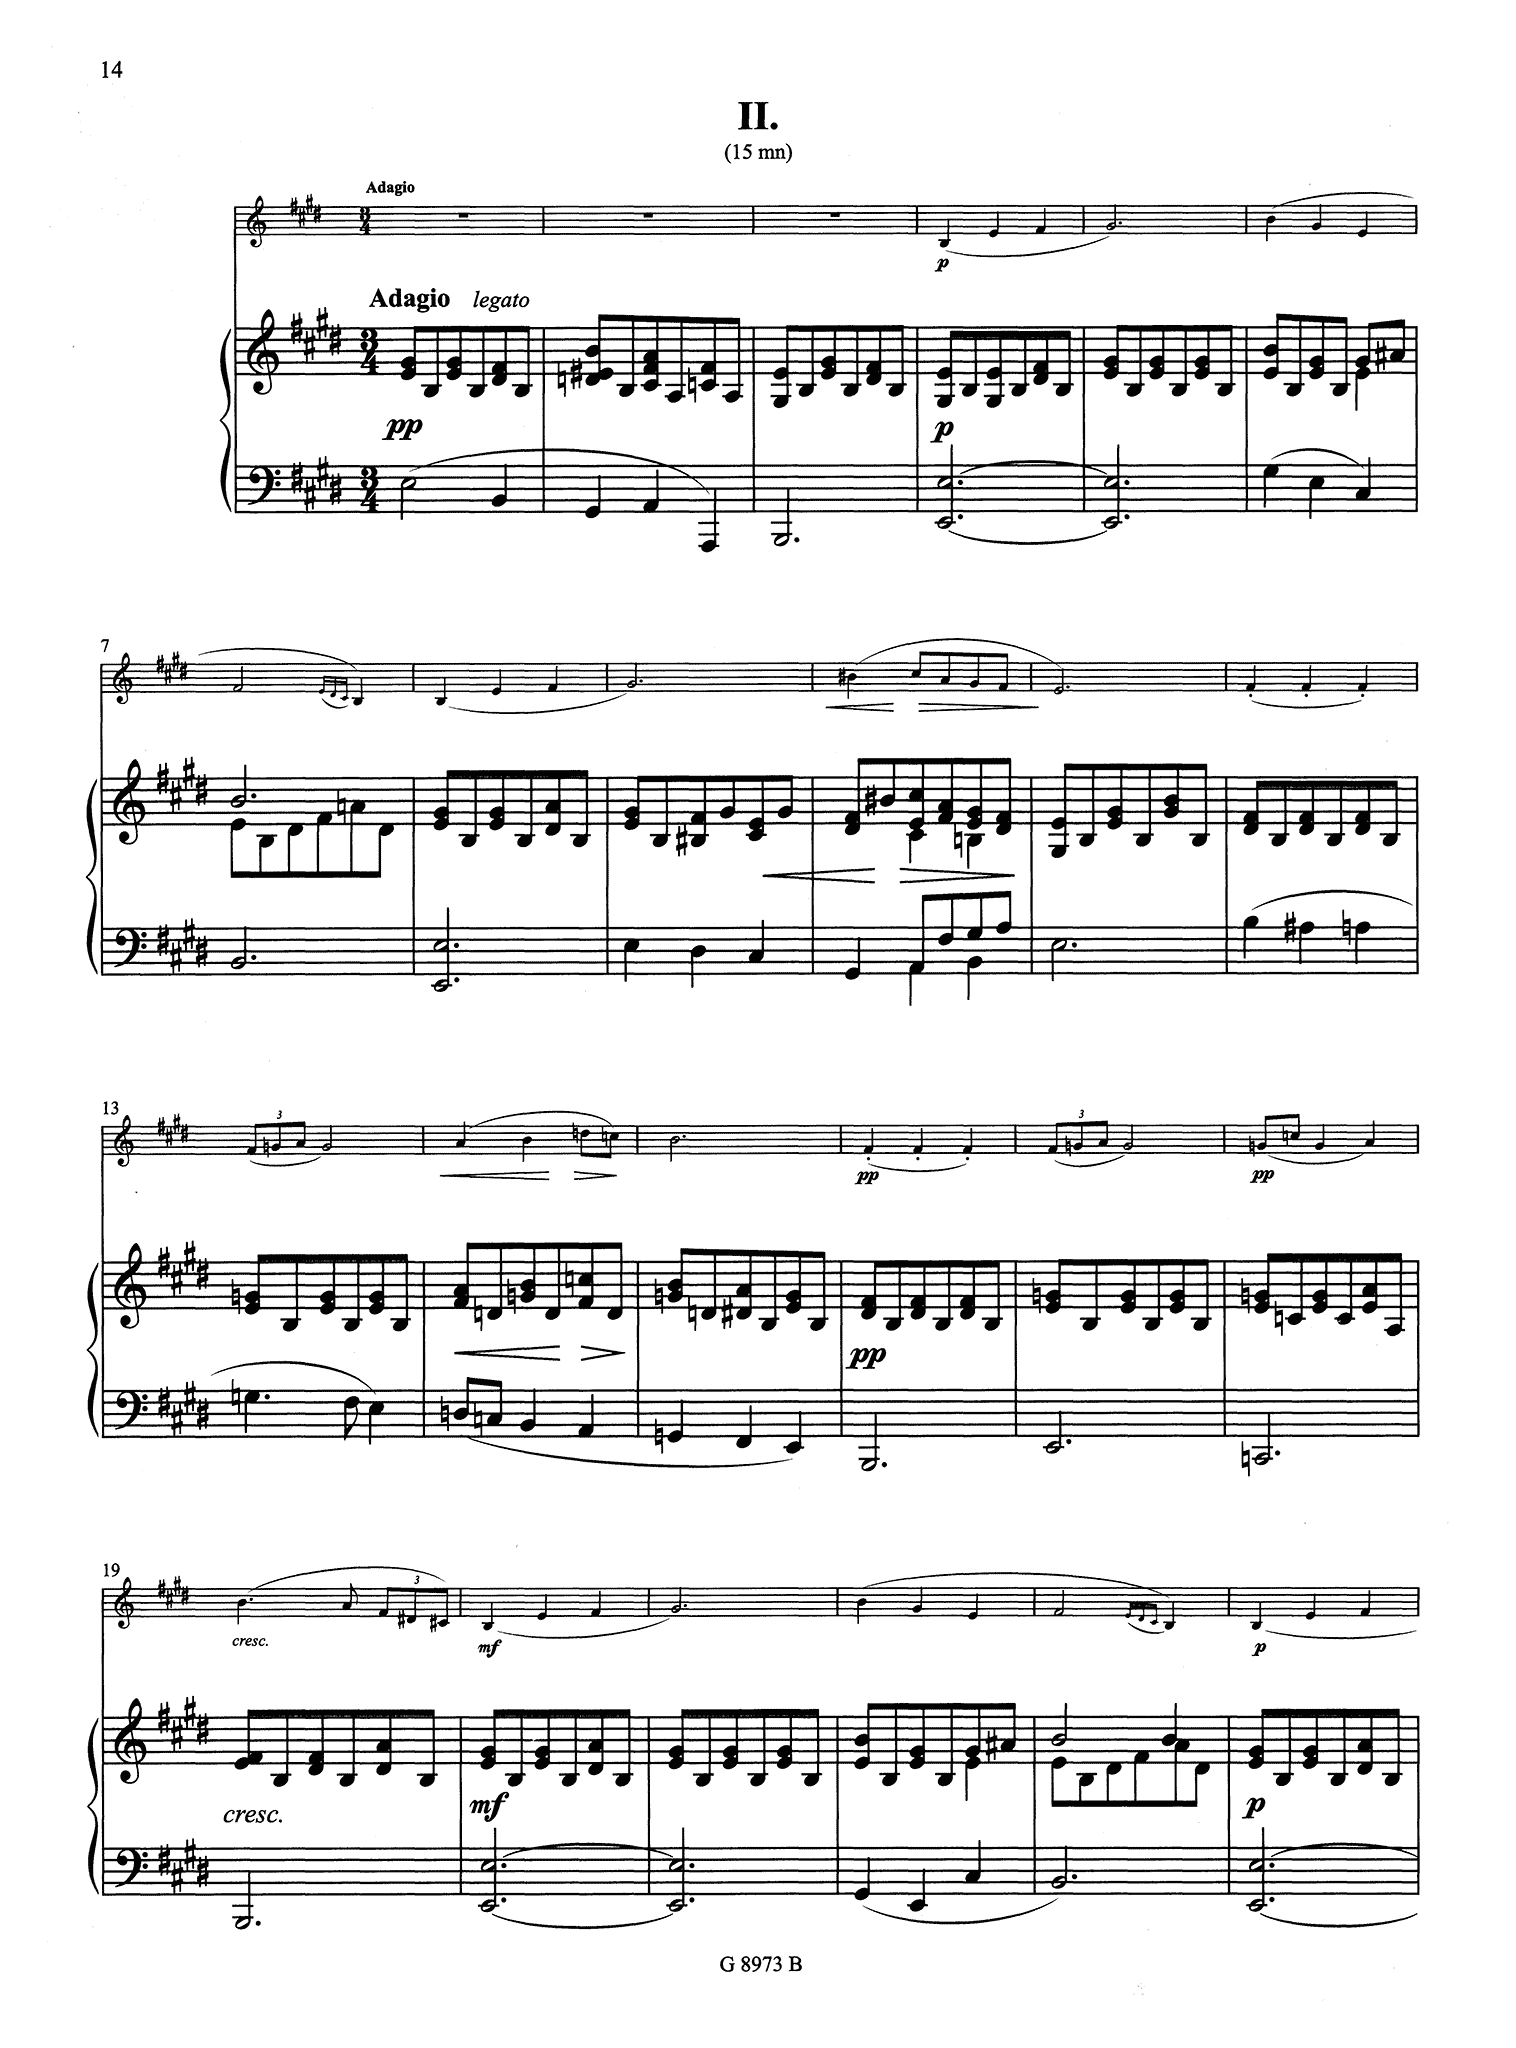 Schubert Arpeggione Sonata clarinet transcription Billaudot - Movement 2